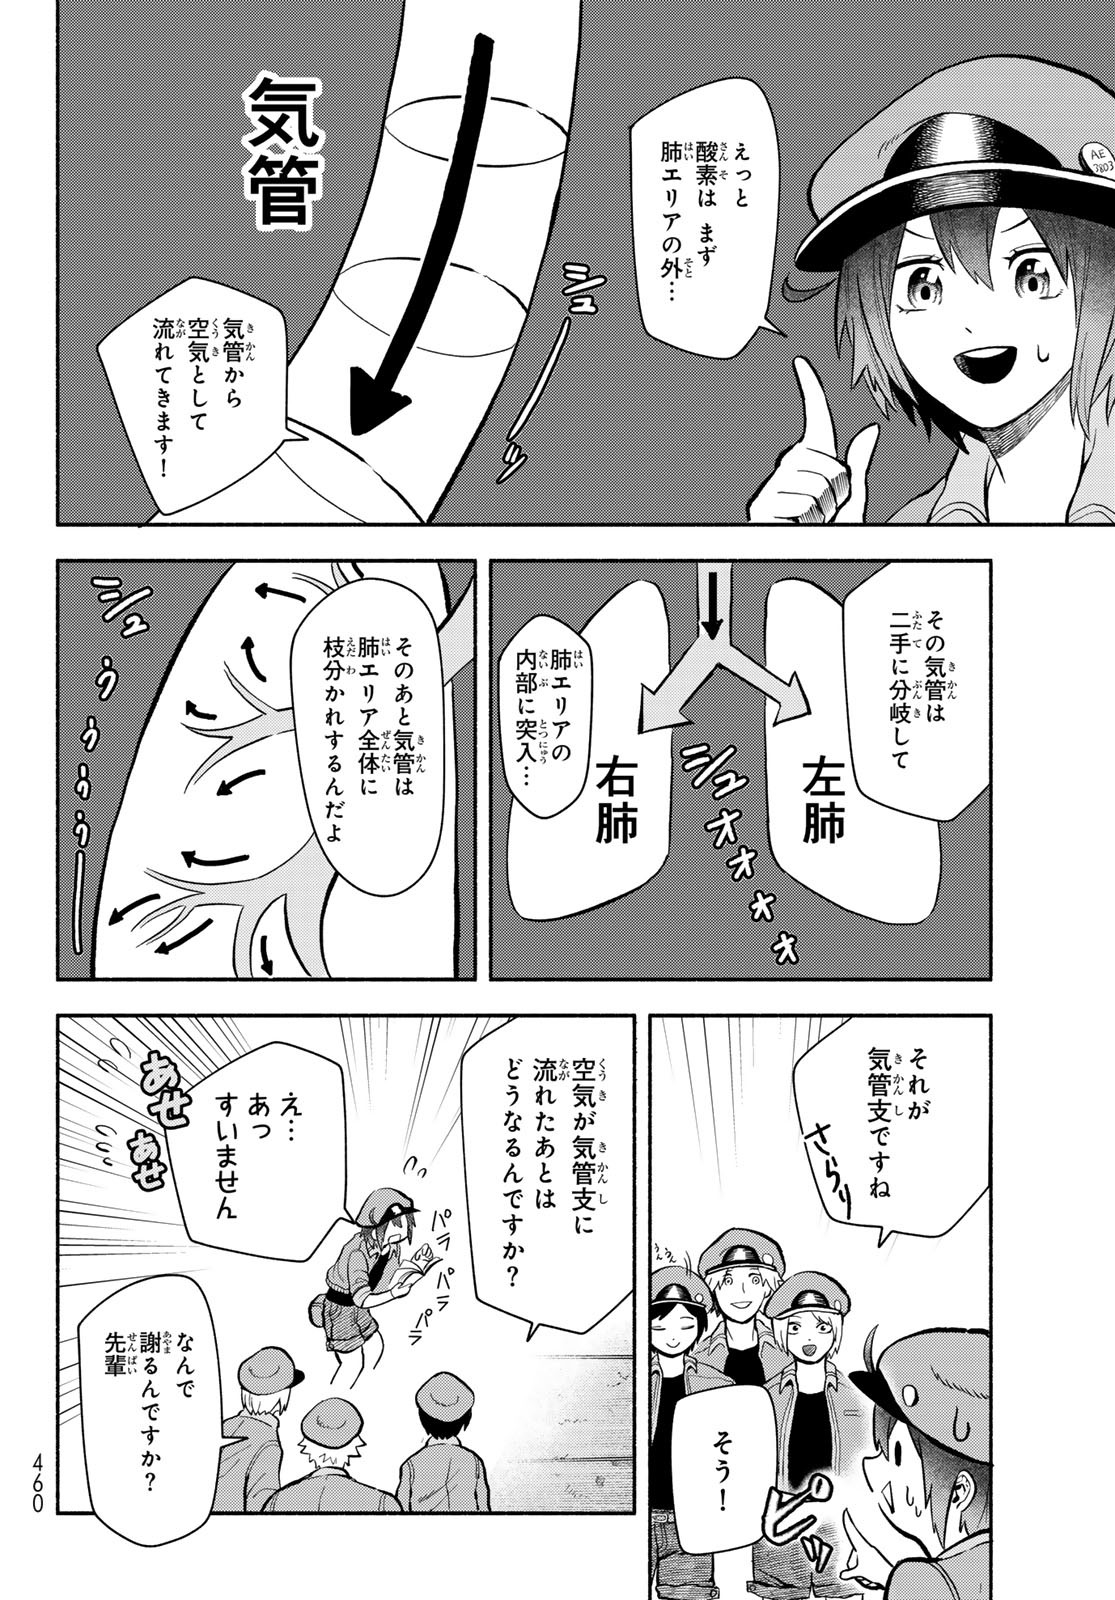 Hataraku Saibou Okusuri - Chapter 7.1 - Page 6